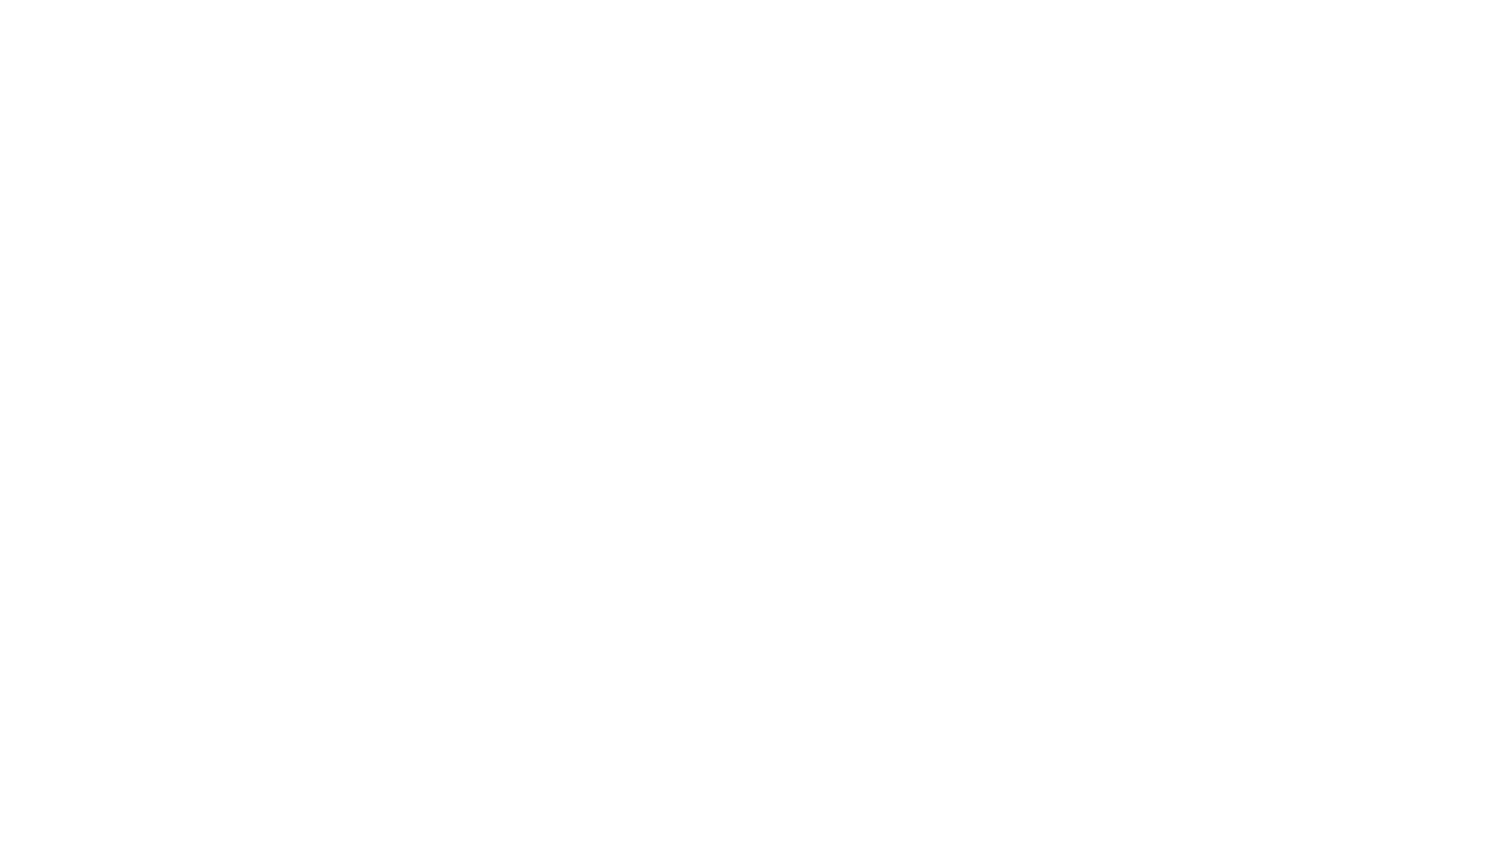 Savoy Ellis